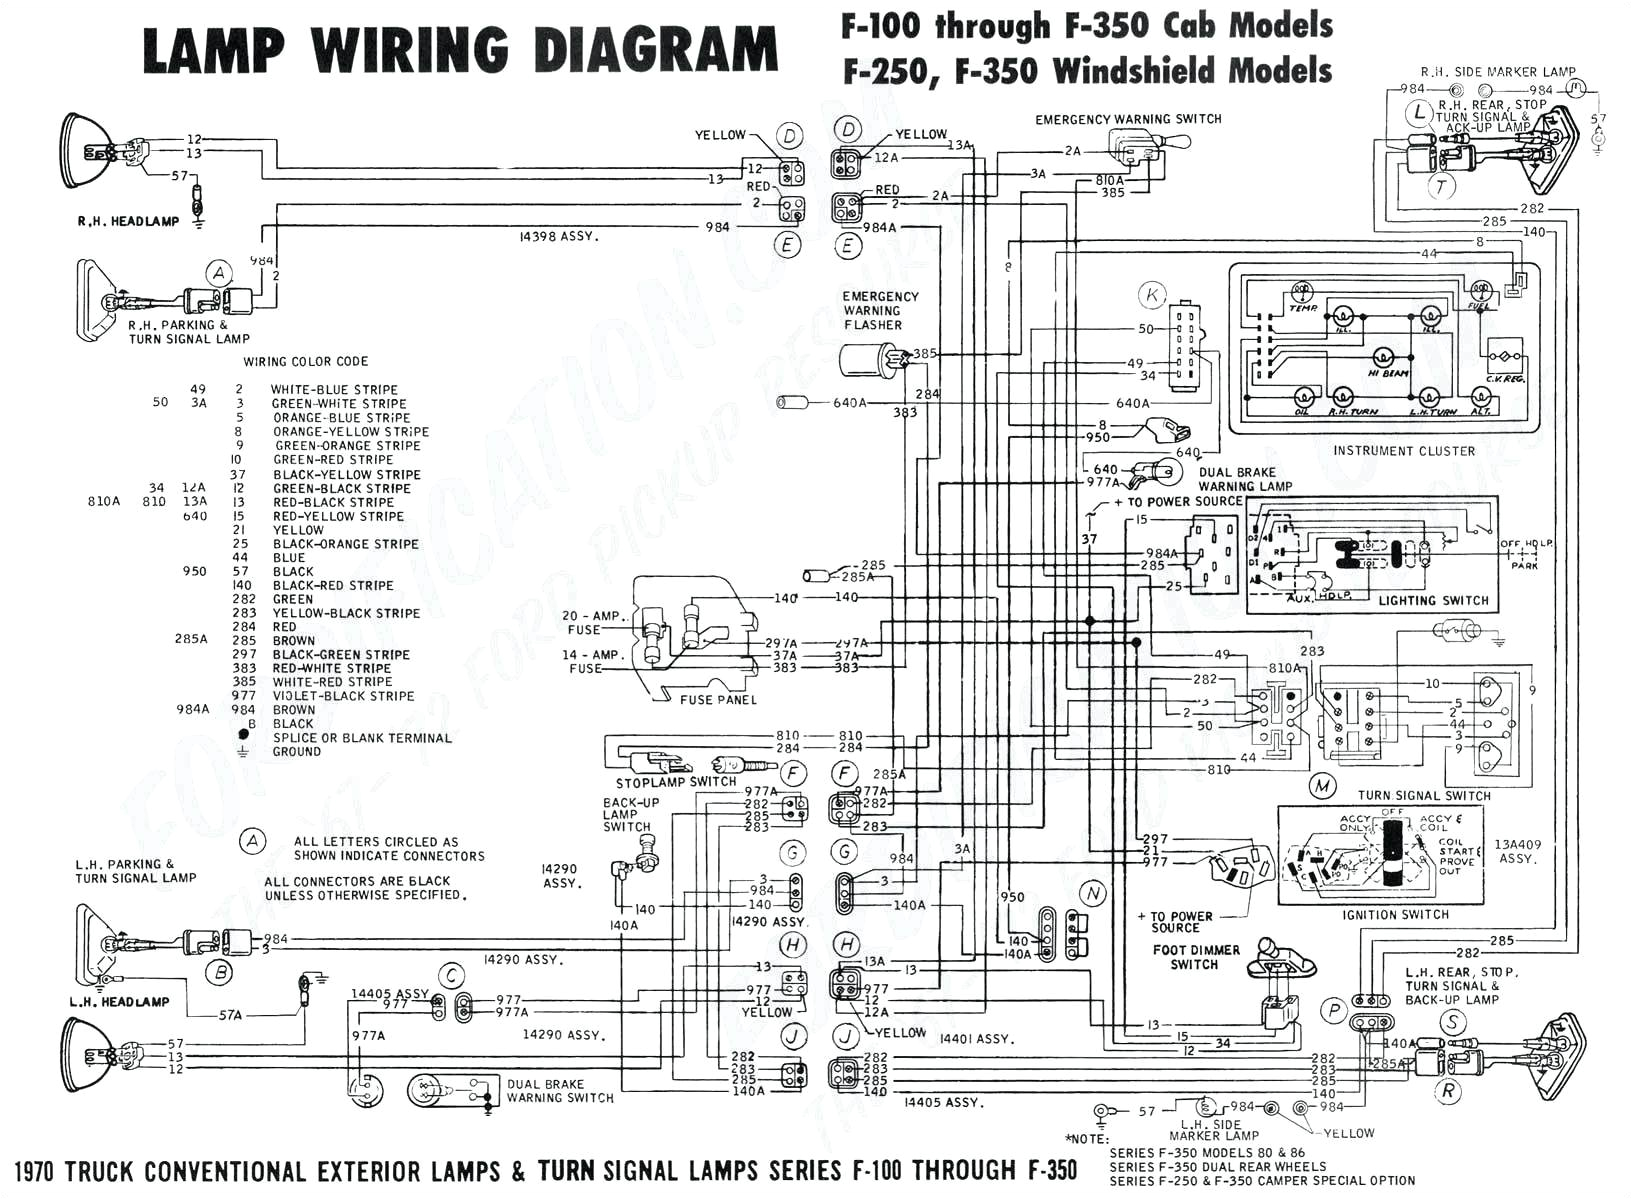 1997 Honda Civic Power Window Wiring Diagram Wiring Diagram Honda Accord 2003 Moreover 2001 Honda Civic Wiring